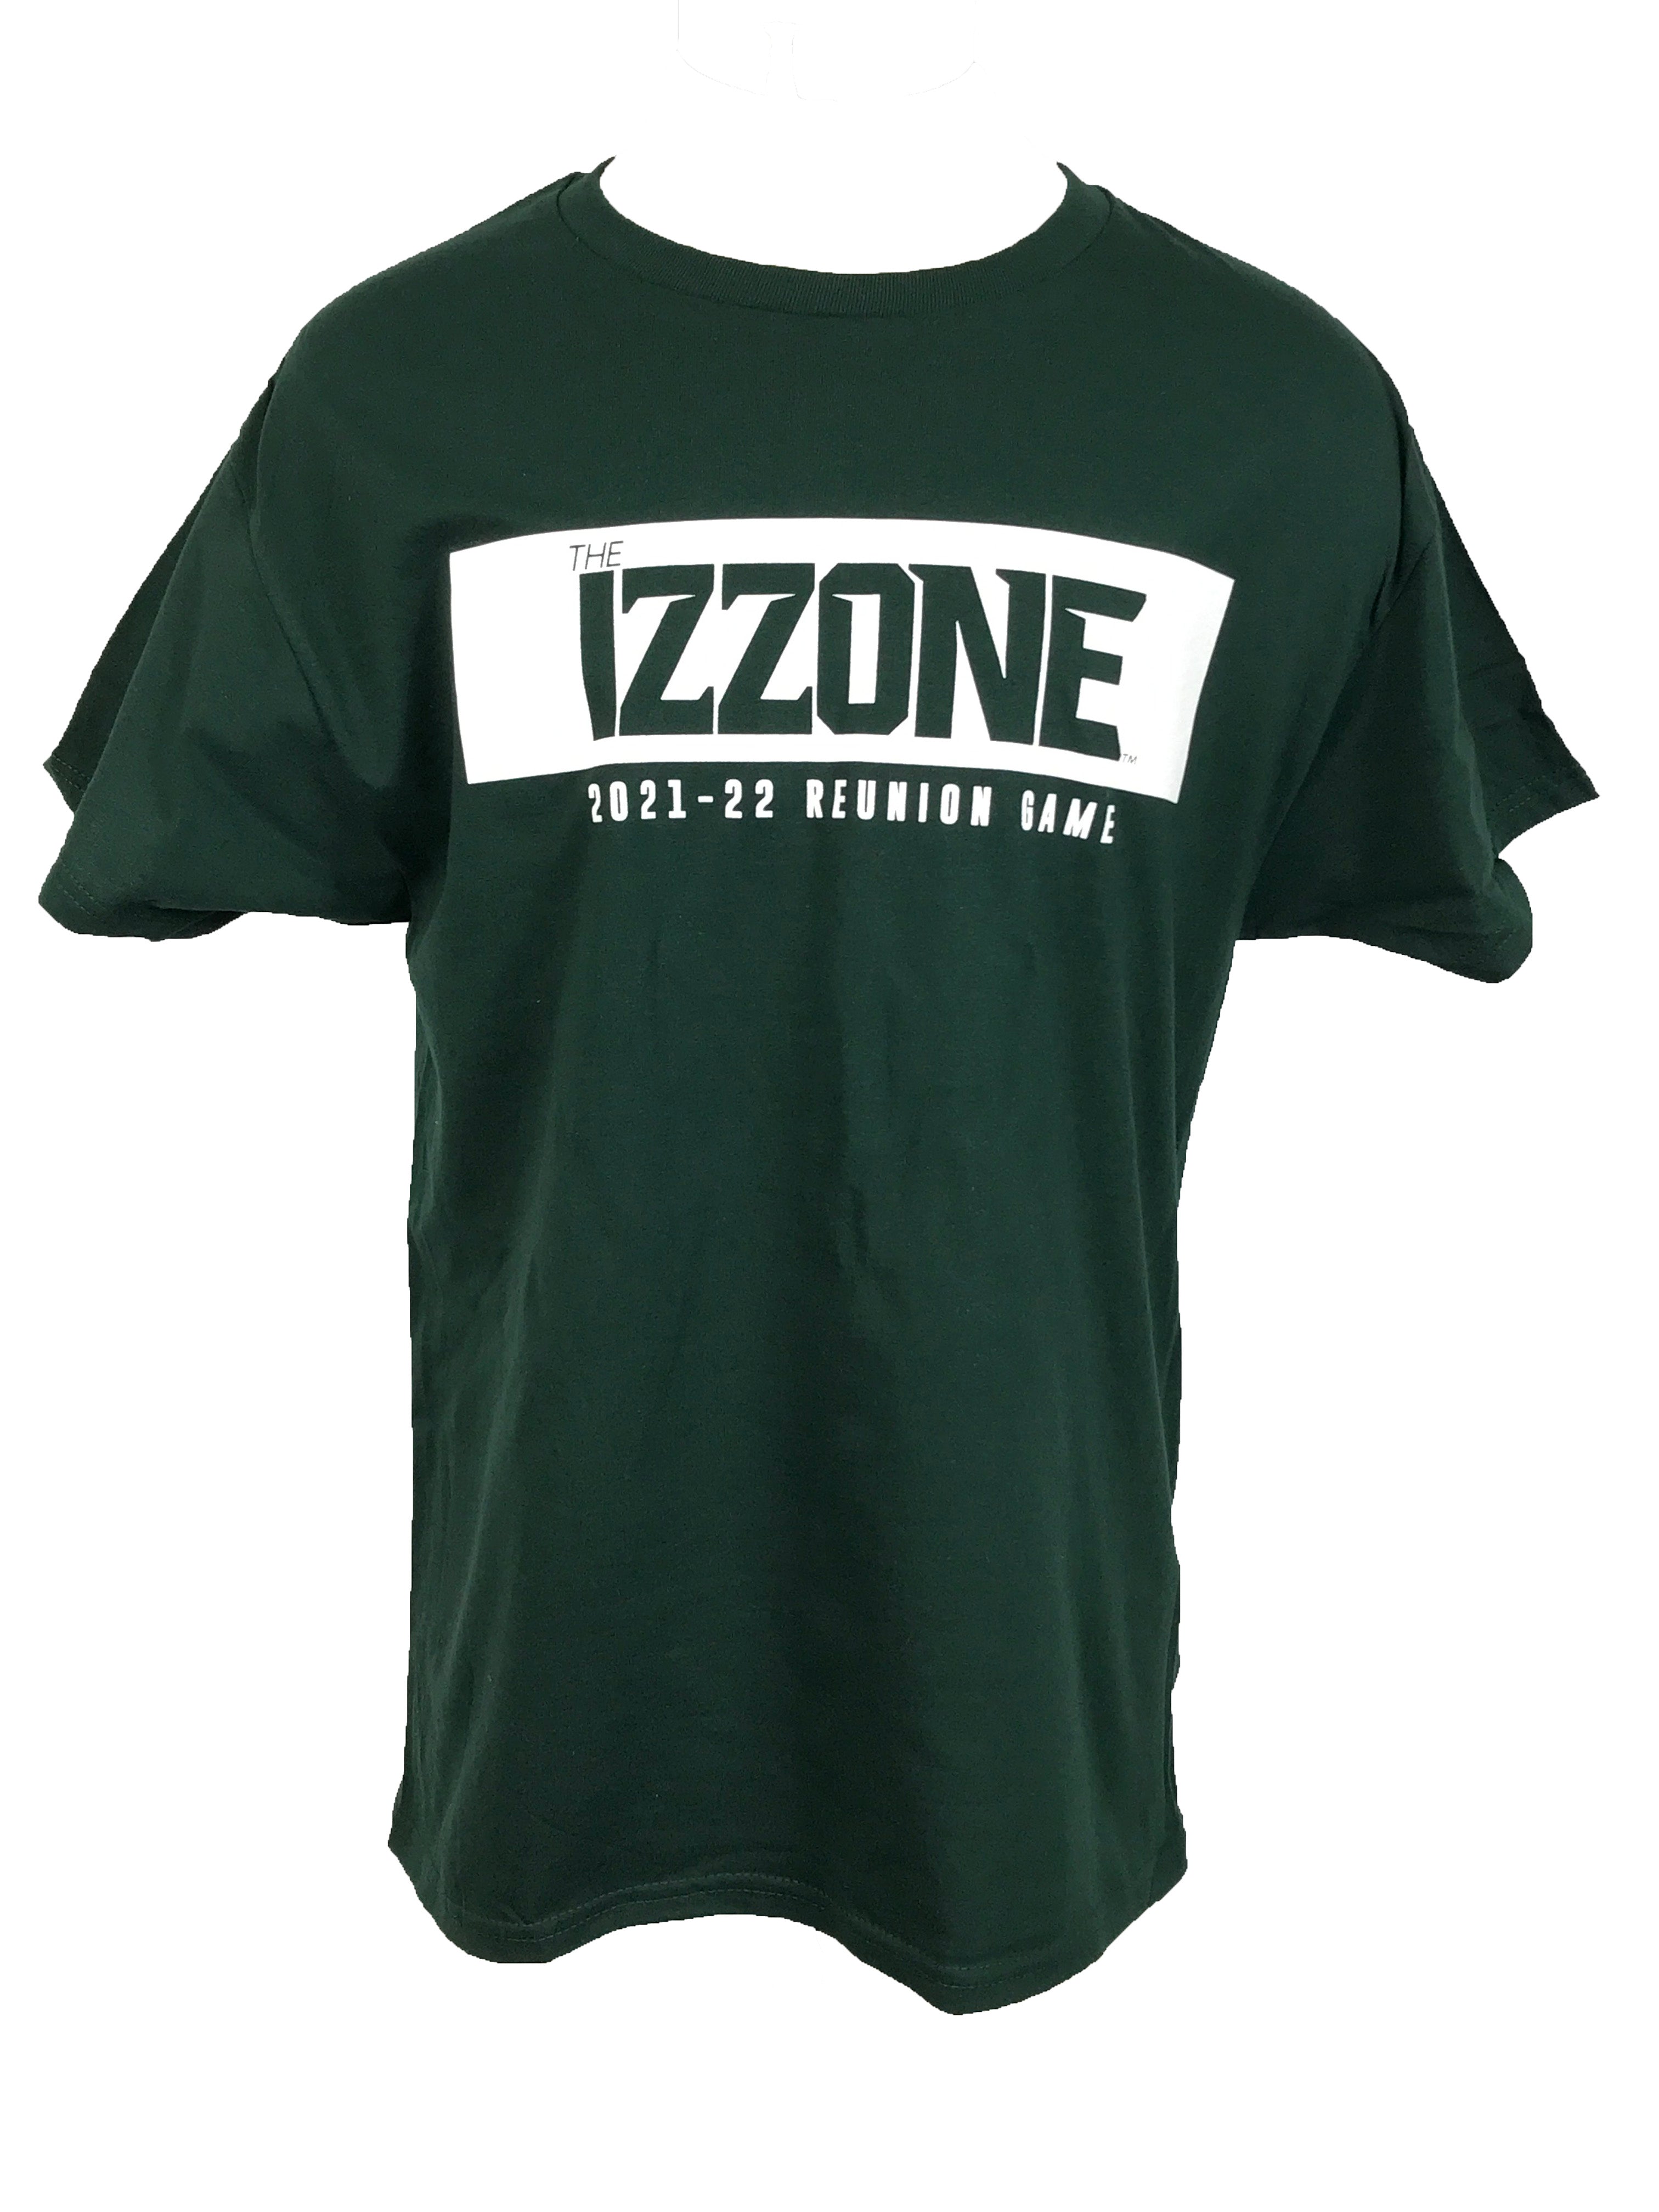 Hanes Green The Izzone 2021-2022 Reunion MSU Basketball T-Shirt Men's Size L